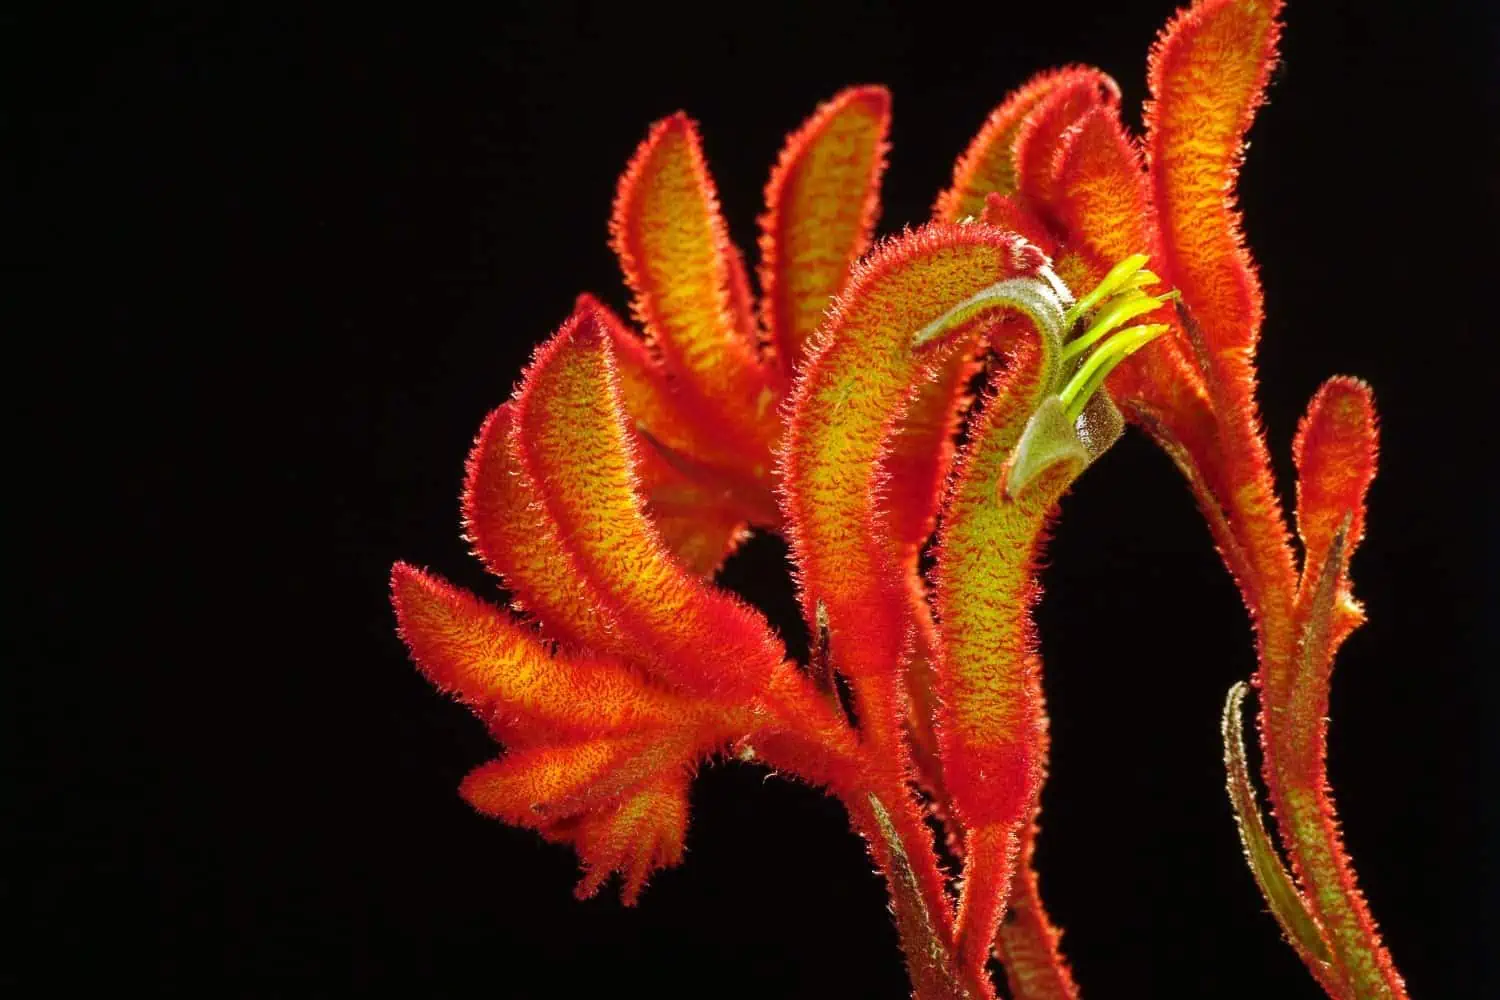 Melbourne flowers to plant in spring - Amber Velvet’ Anigozanthos hybrid